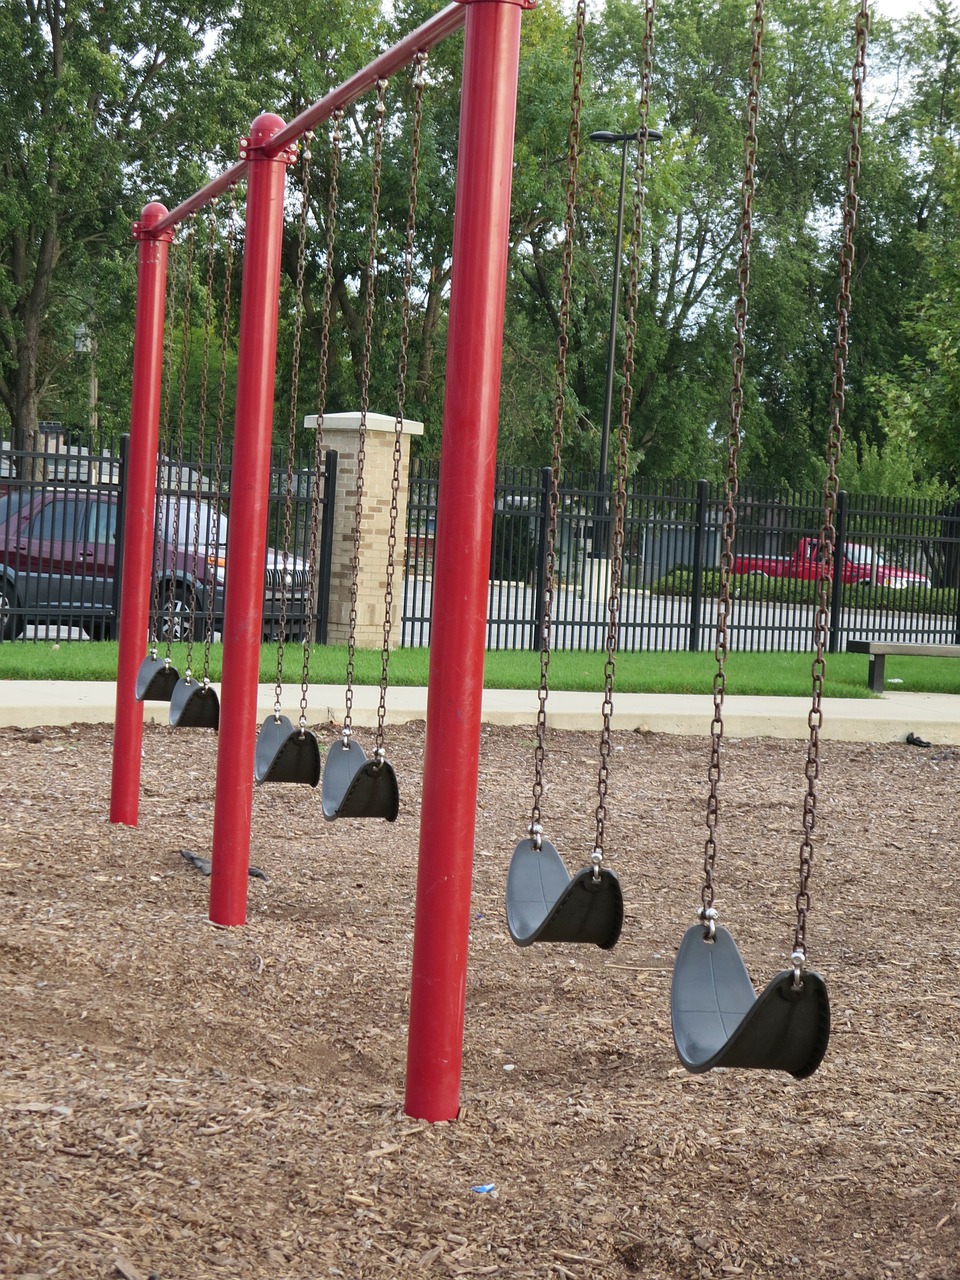 Swing,kids,fun,play,park - free image from needpix.com